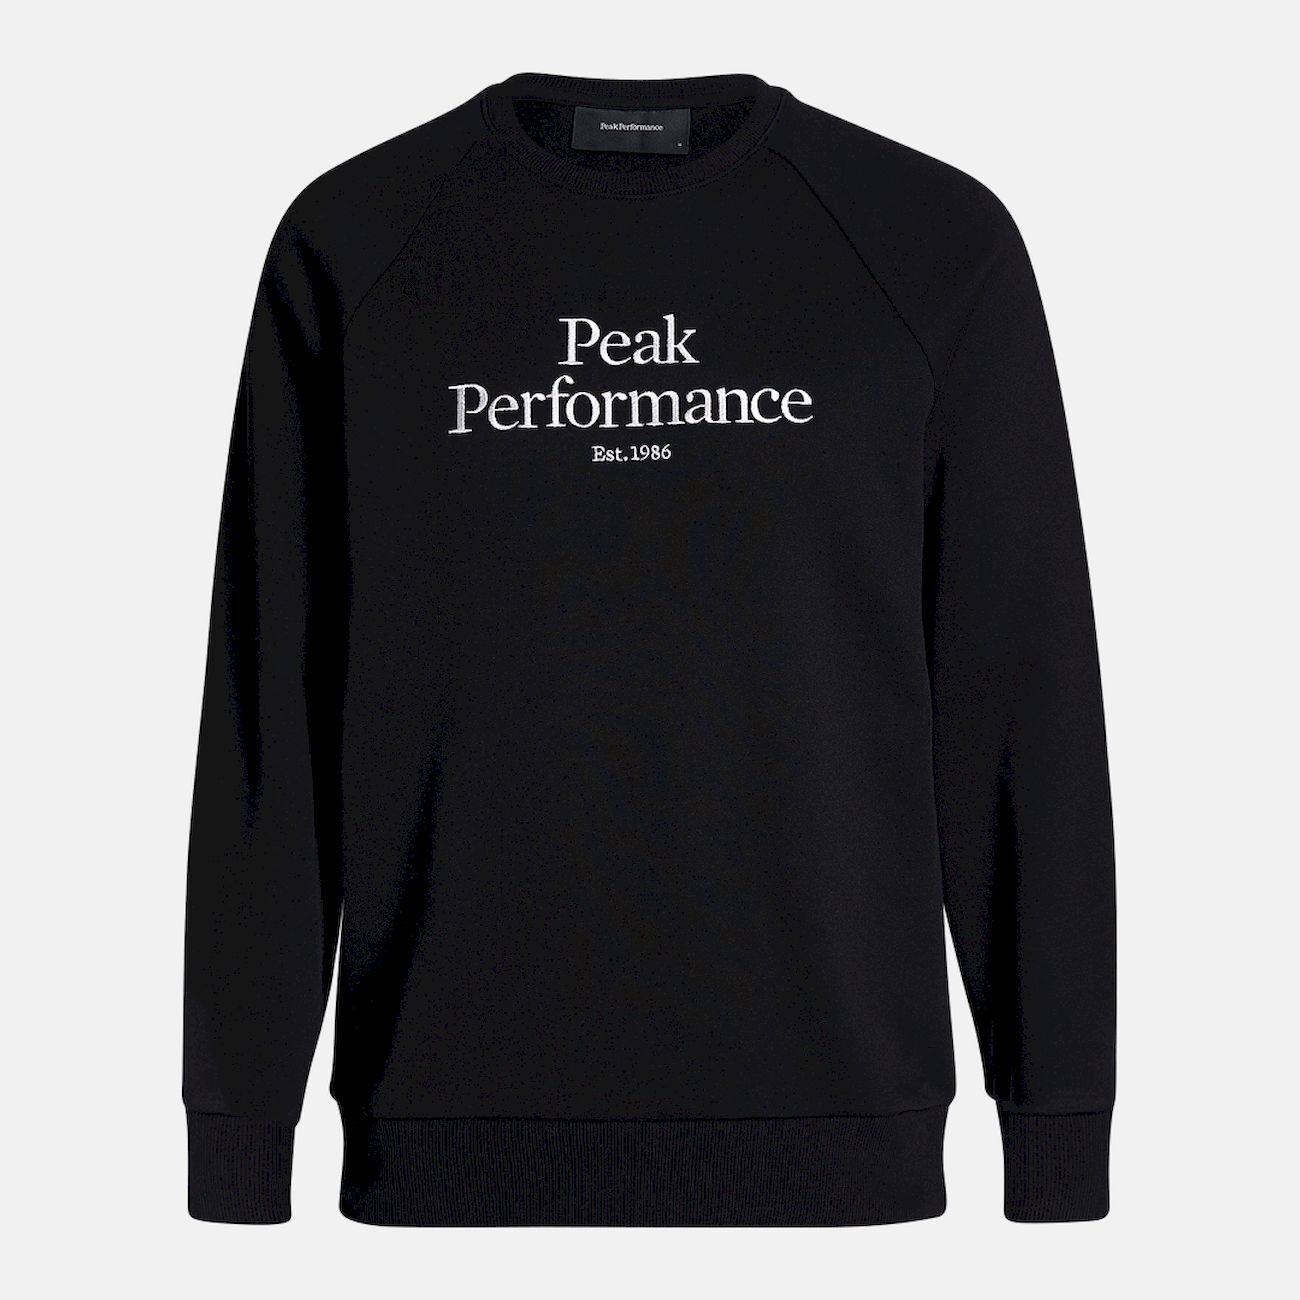 Peak Performance Original Crew - Jerséis - Hombre